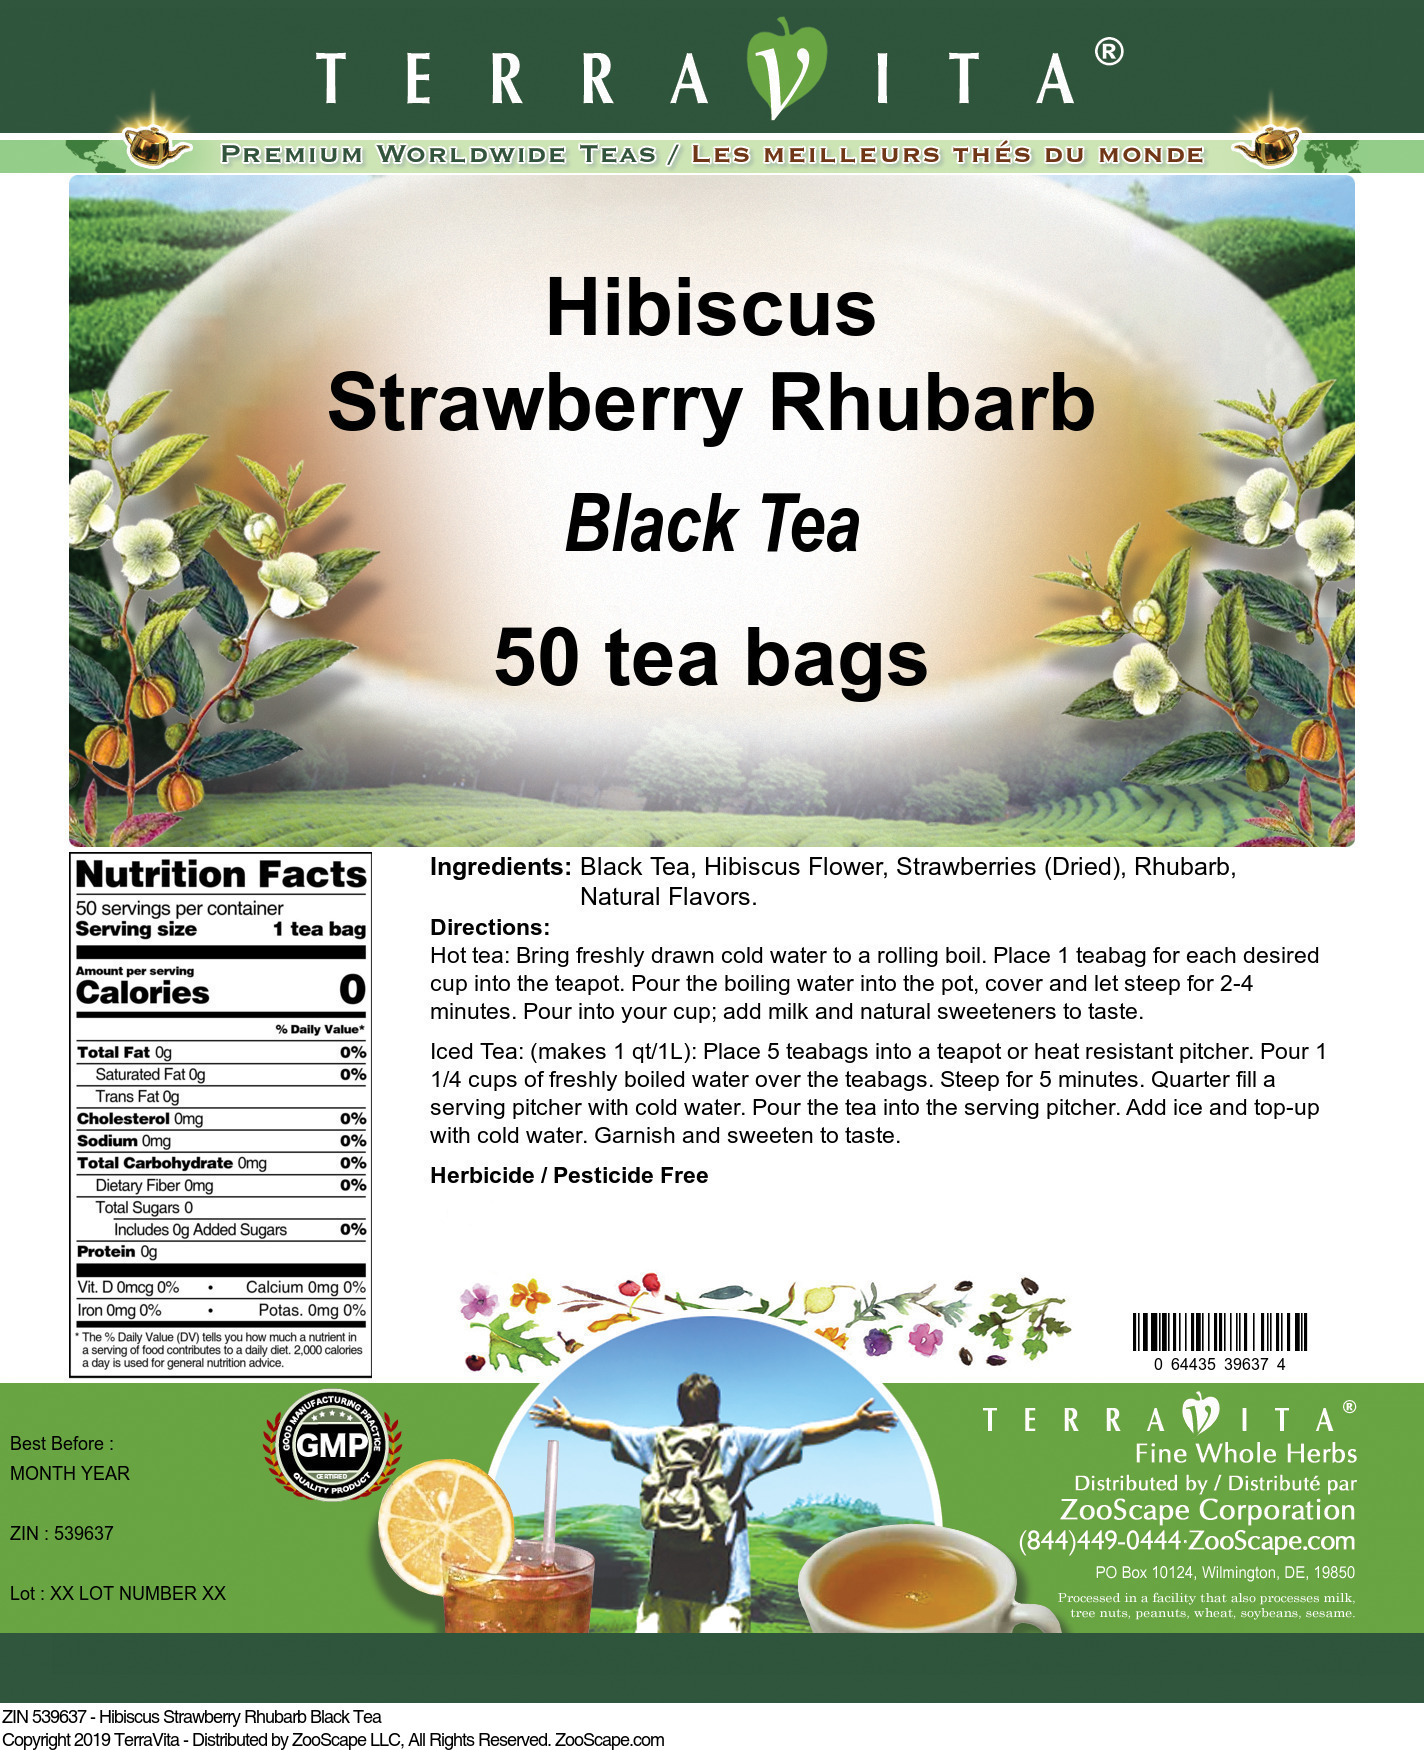 Hibiscus Strawberry Rhubarb Black Tea - Label